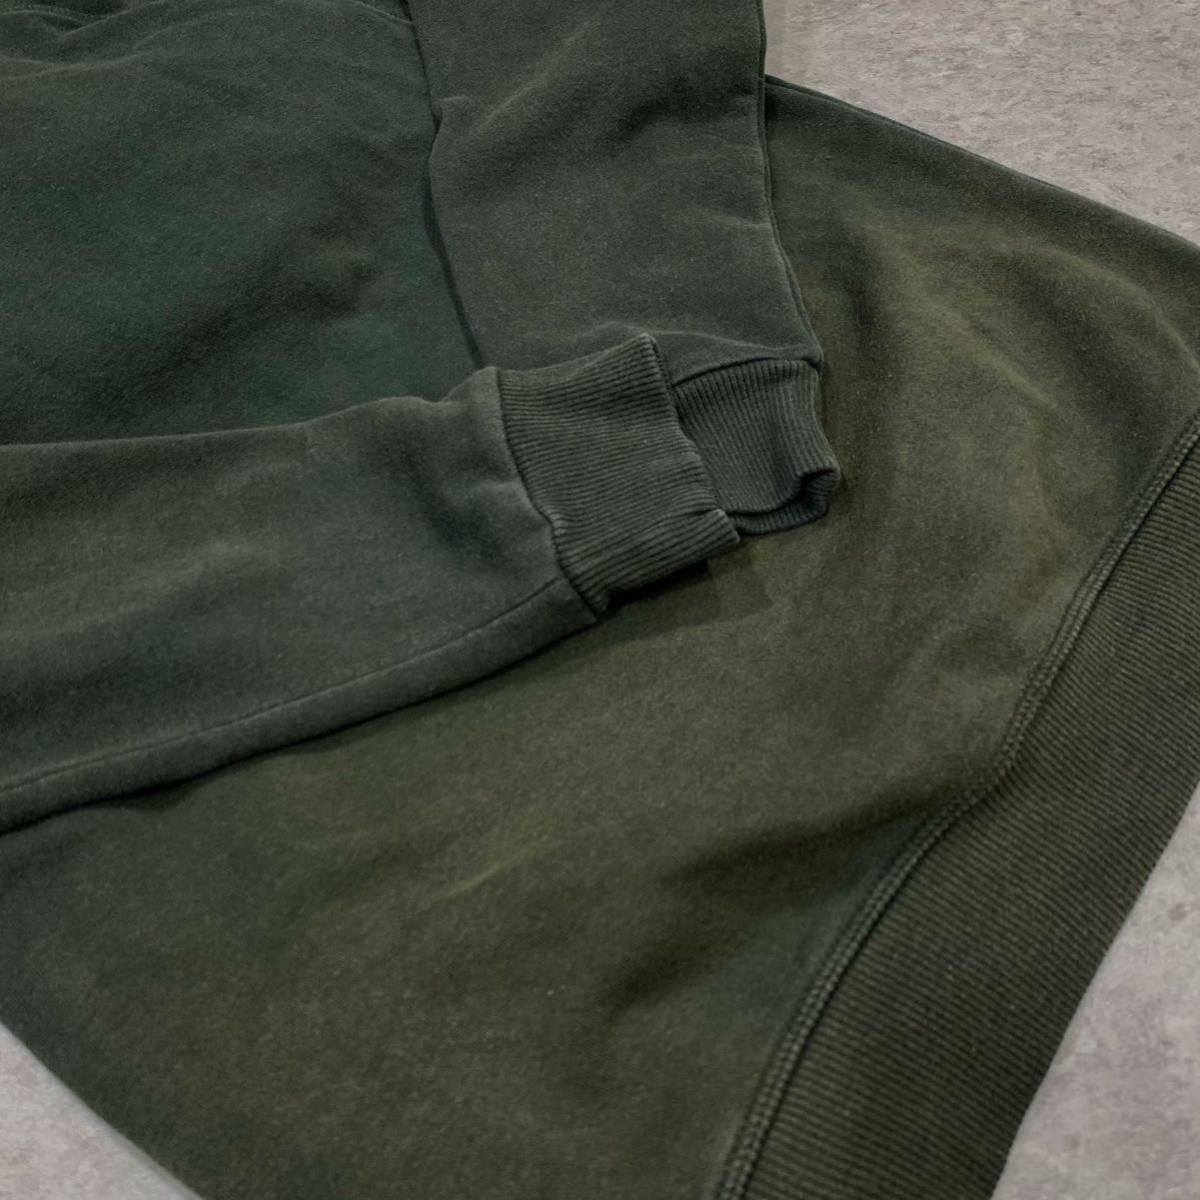  lady's Parker sweatshirt fleece sweat 8 sheets set sale Nike Adidas Uniqlo Disney size S-M corresponding #0119KHM④